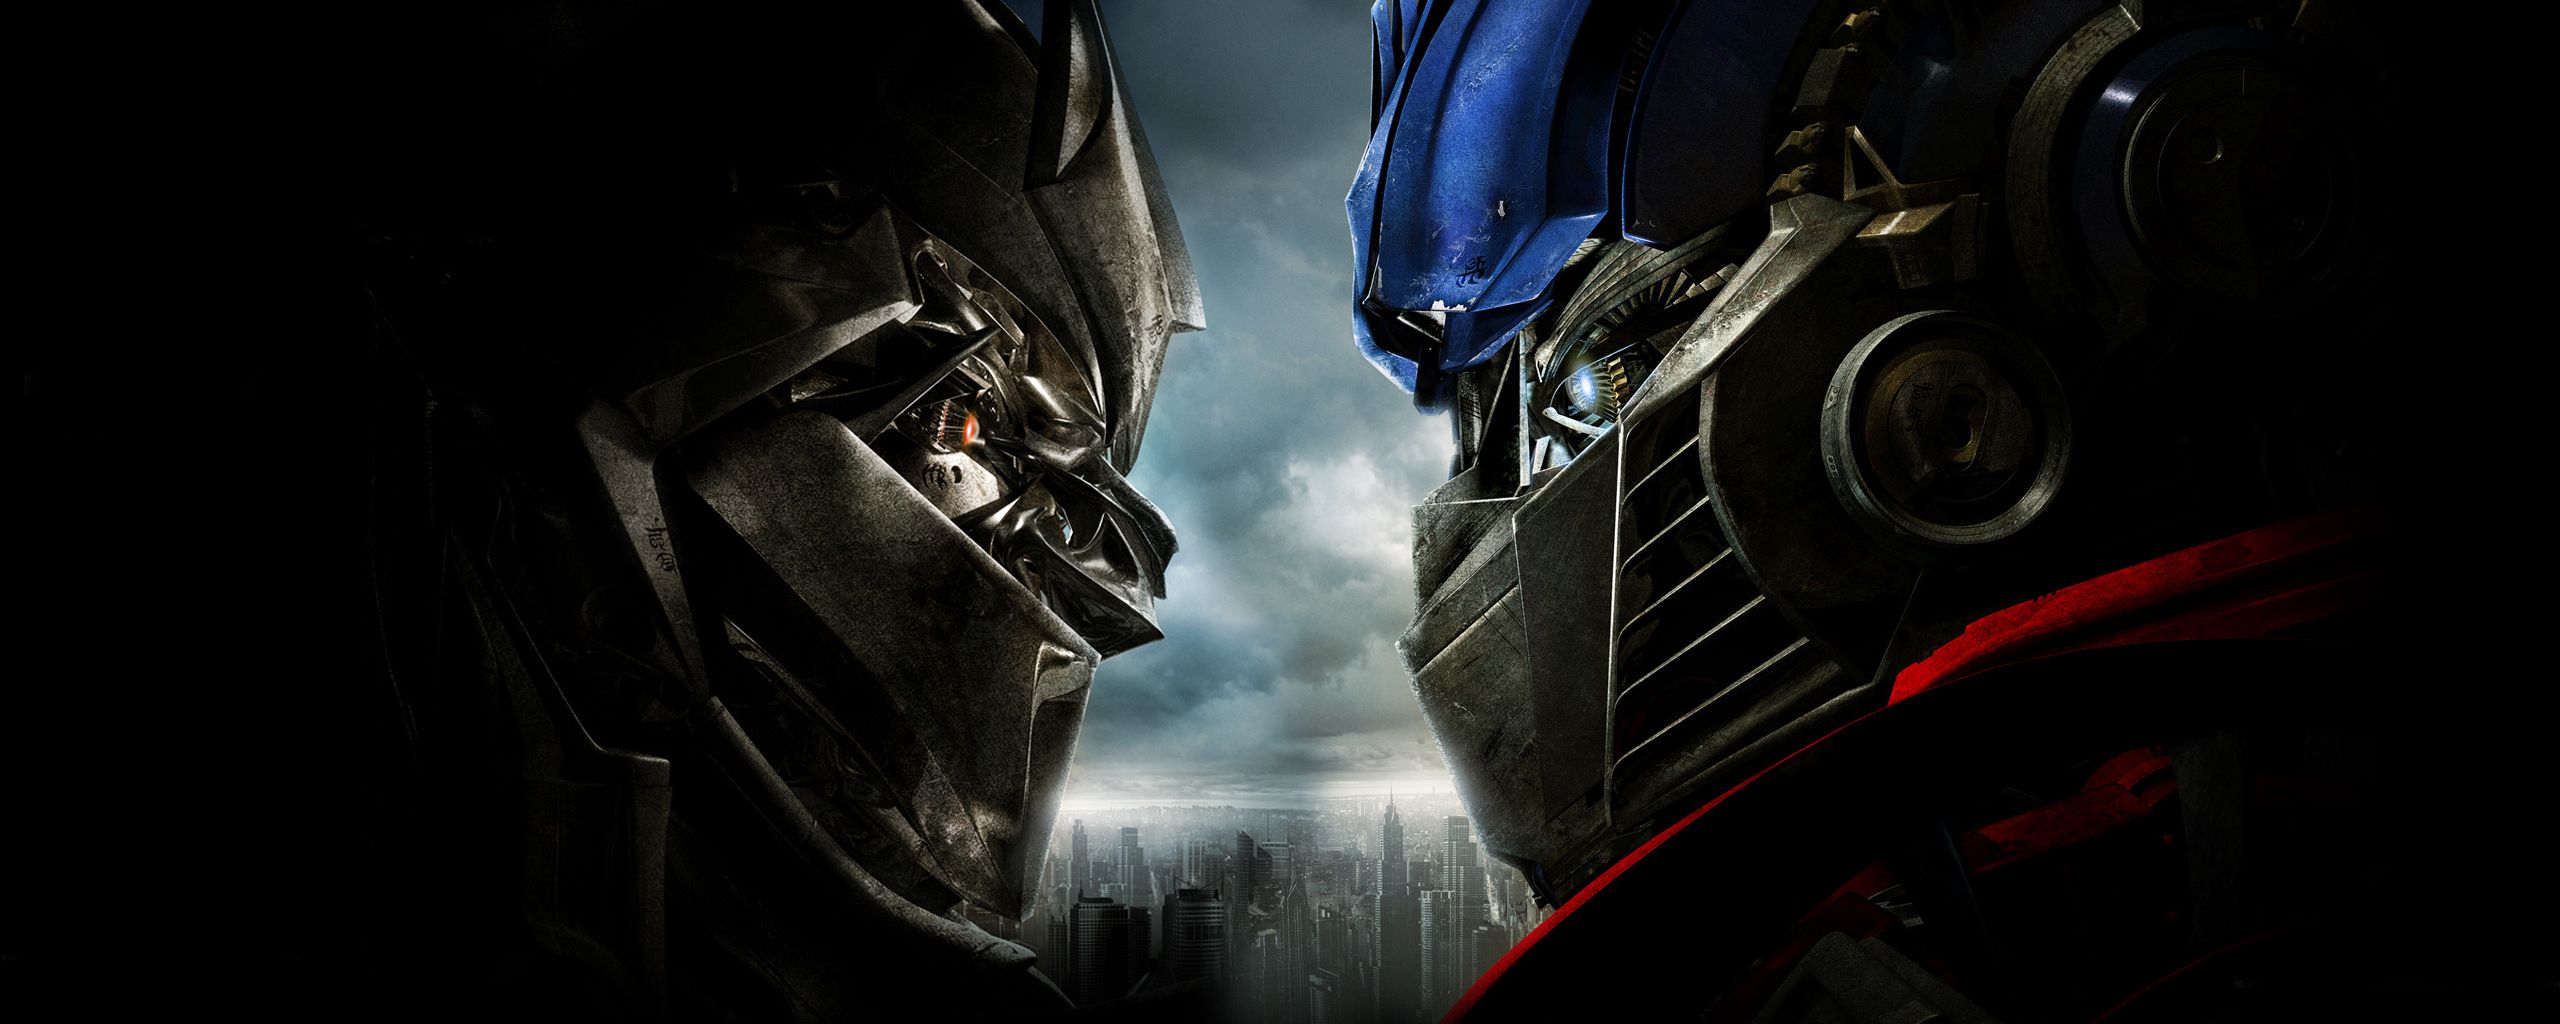 Optimus Prime Megatron Transformers 2 - Revenge of the Fallen